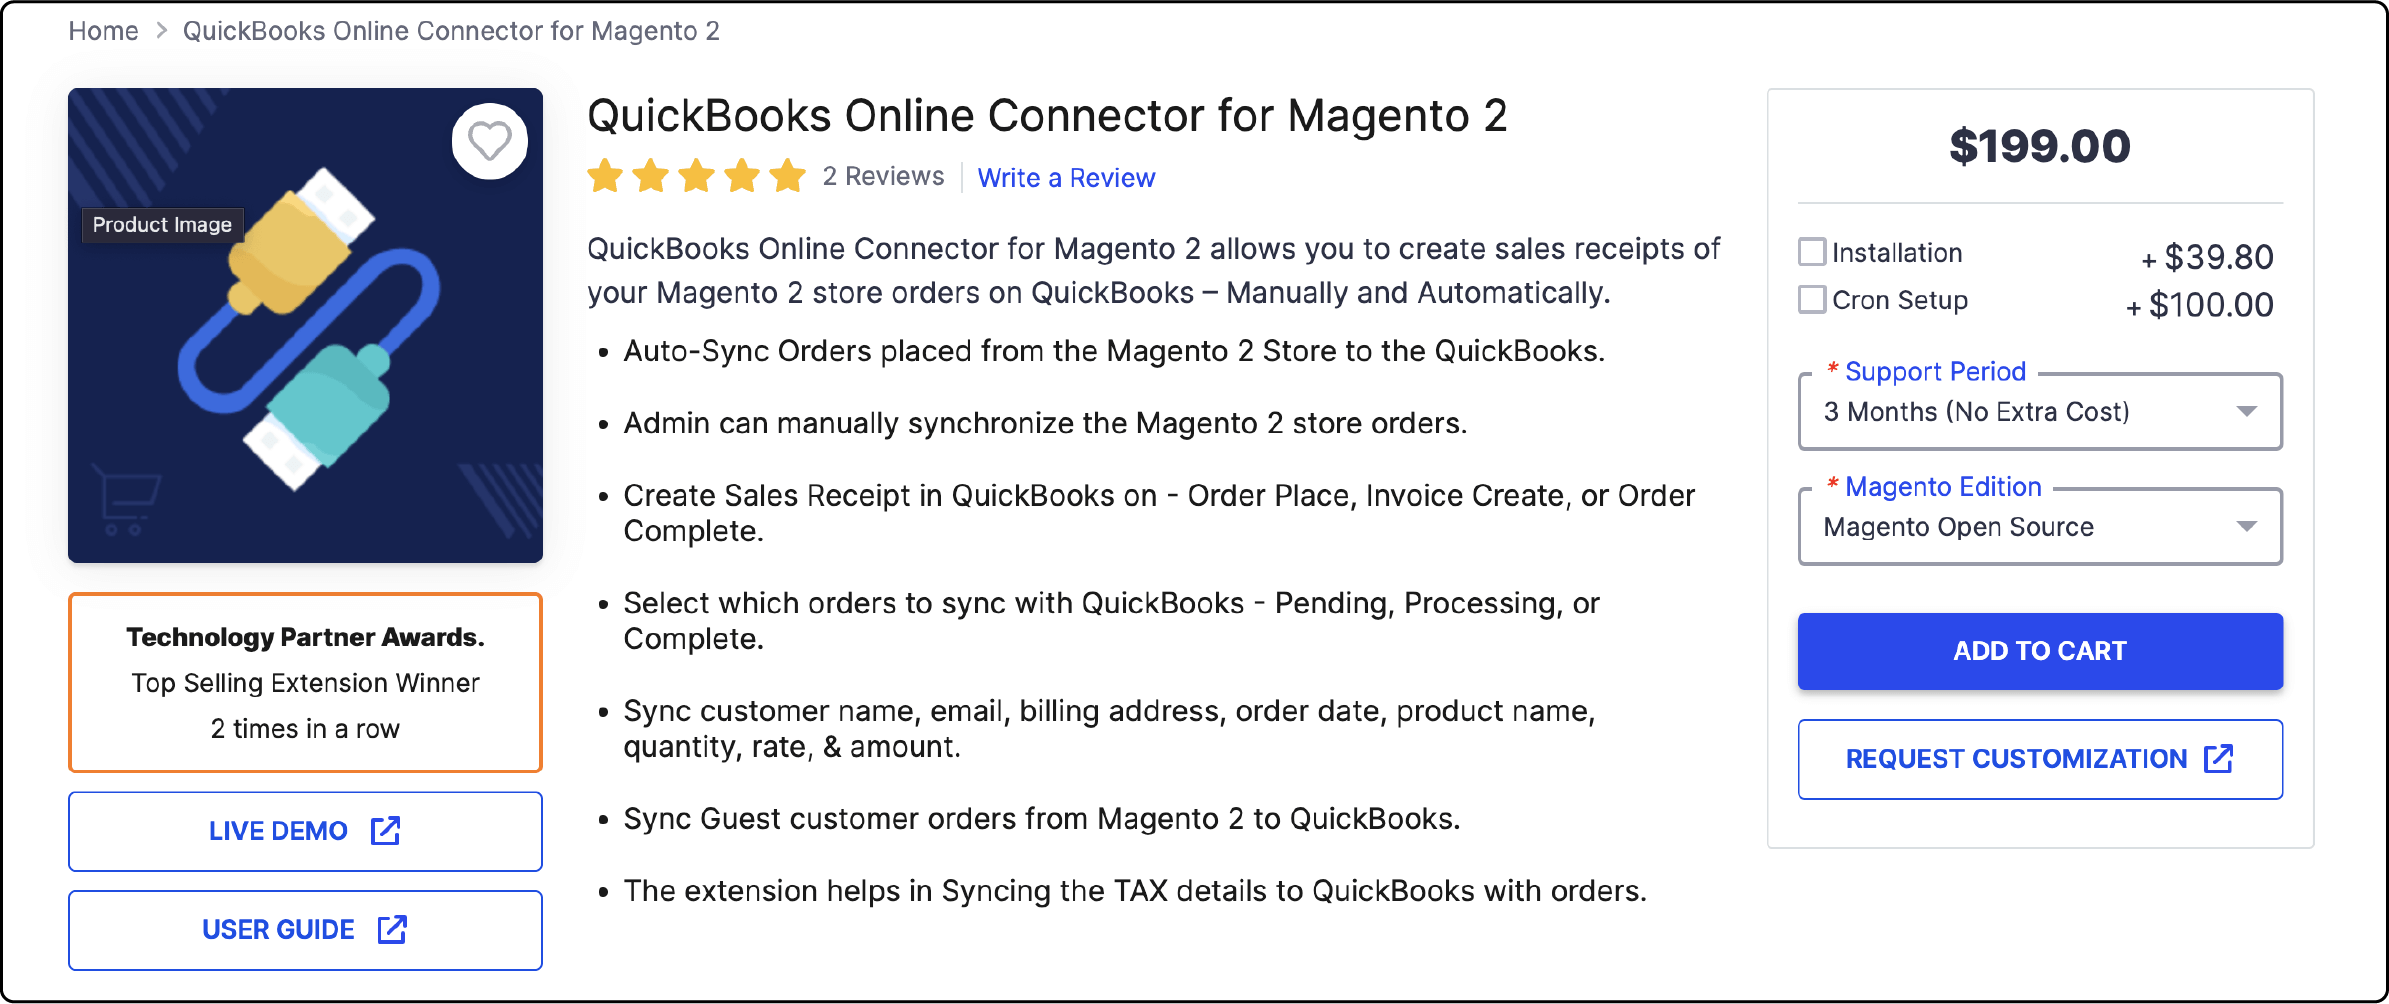 Webkul's QuickBooks Online Connector for Magento 2